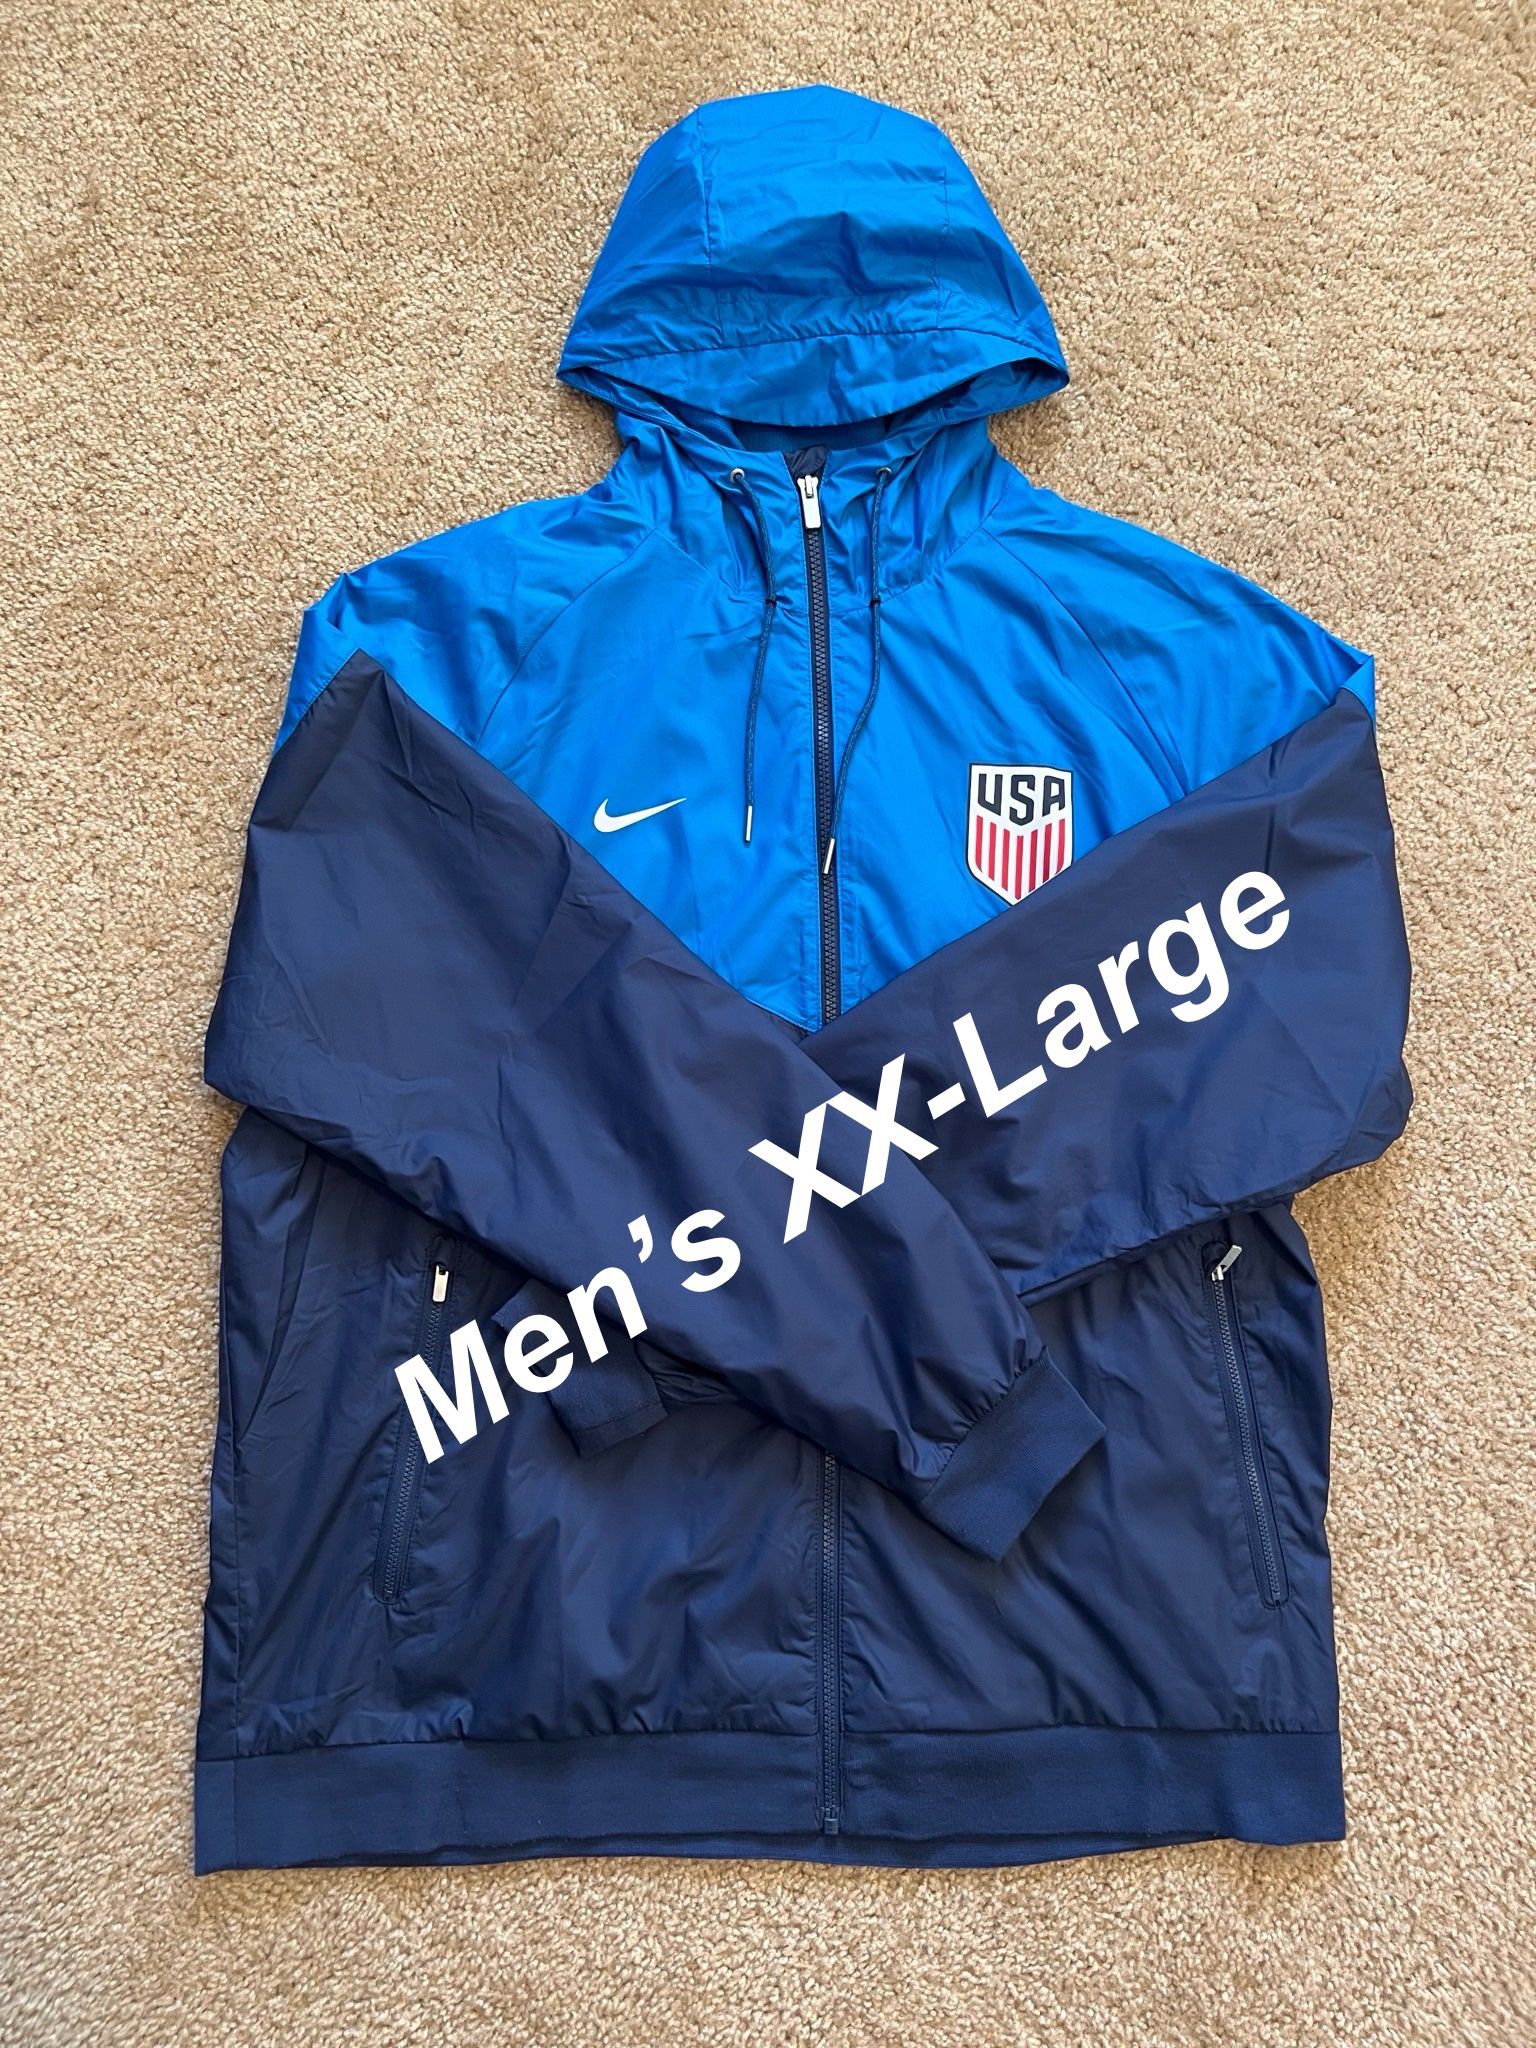 NIKE FC / USA USMNT Full-Zip ATHLETIC Soccer Jacket w/ Crest Badge / SIZE: Mens XX-Large XXL 2XL / Brand New w/o Tags!! / Blues